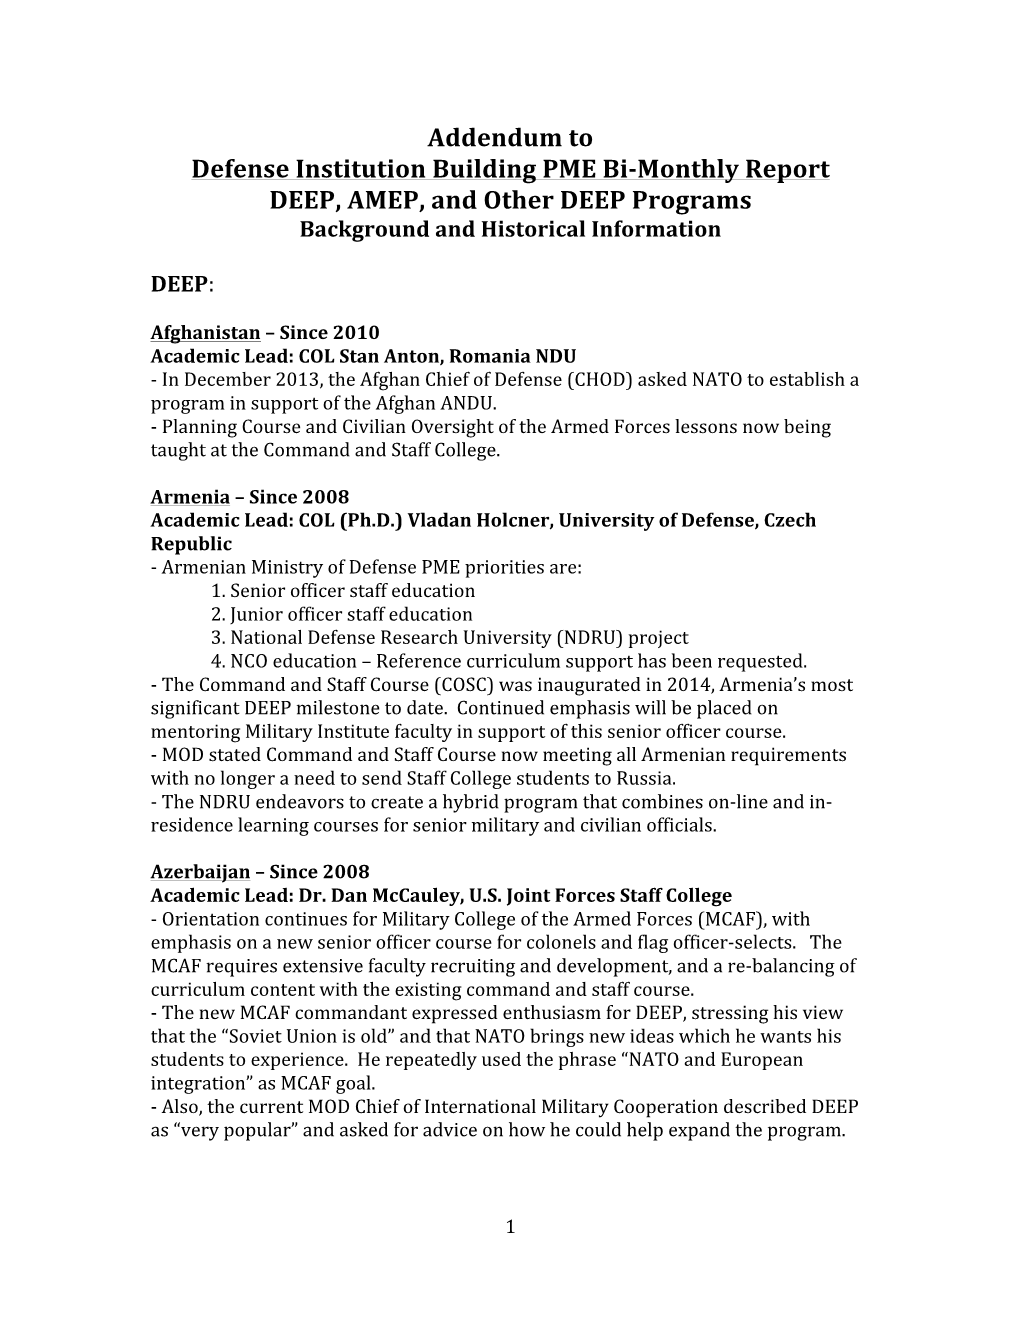 Addendum to Defense Institution Building PME Bi-‐Monthly Report